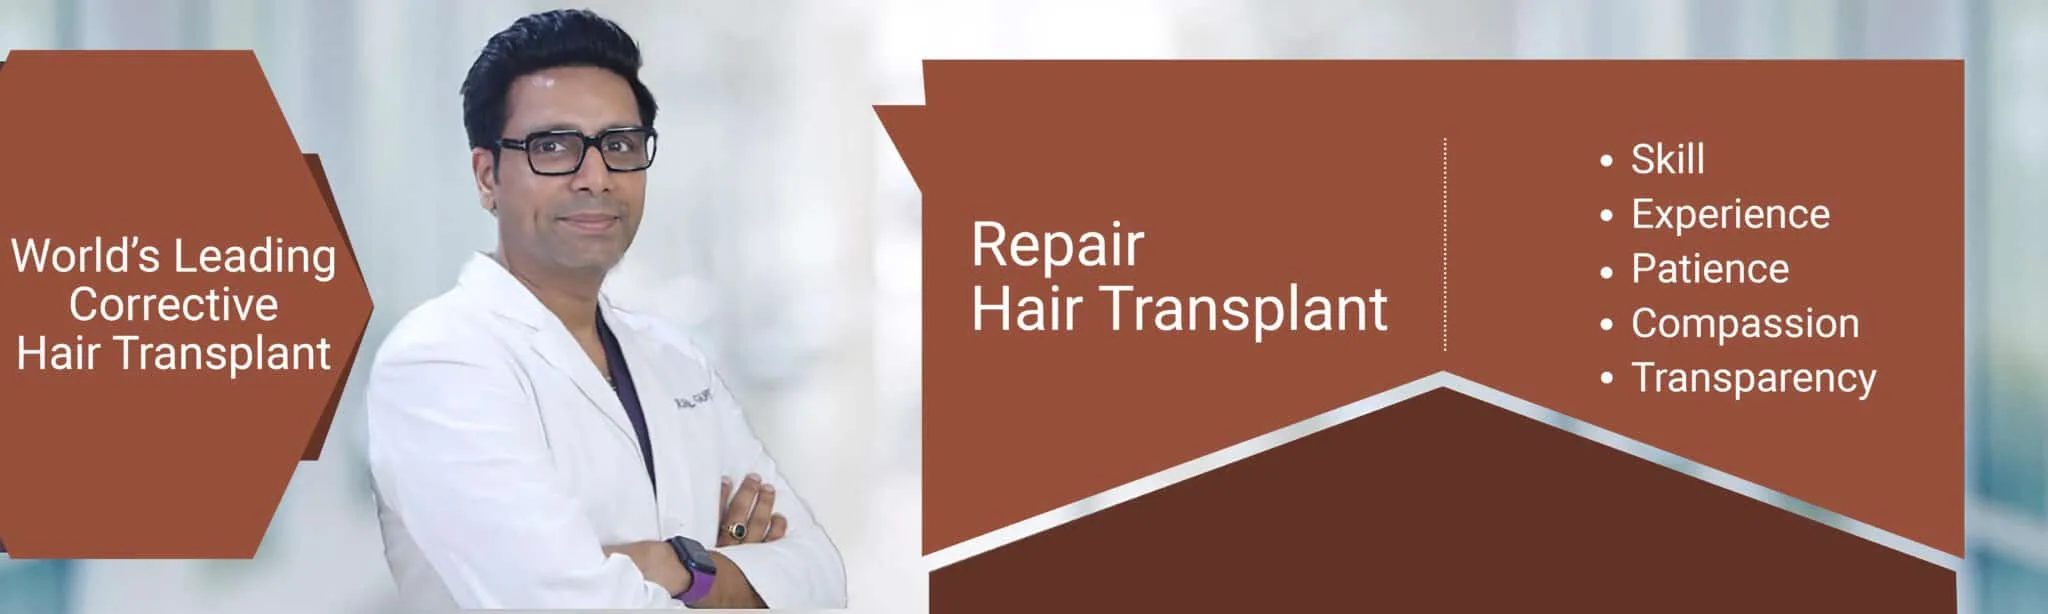 repair hair 1 1 2048x614 1 jpg